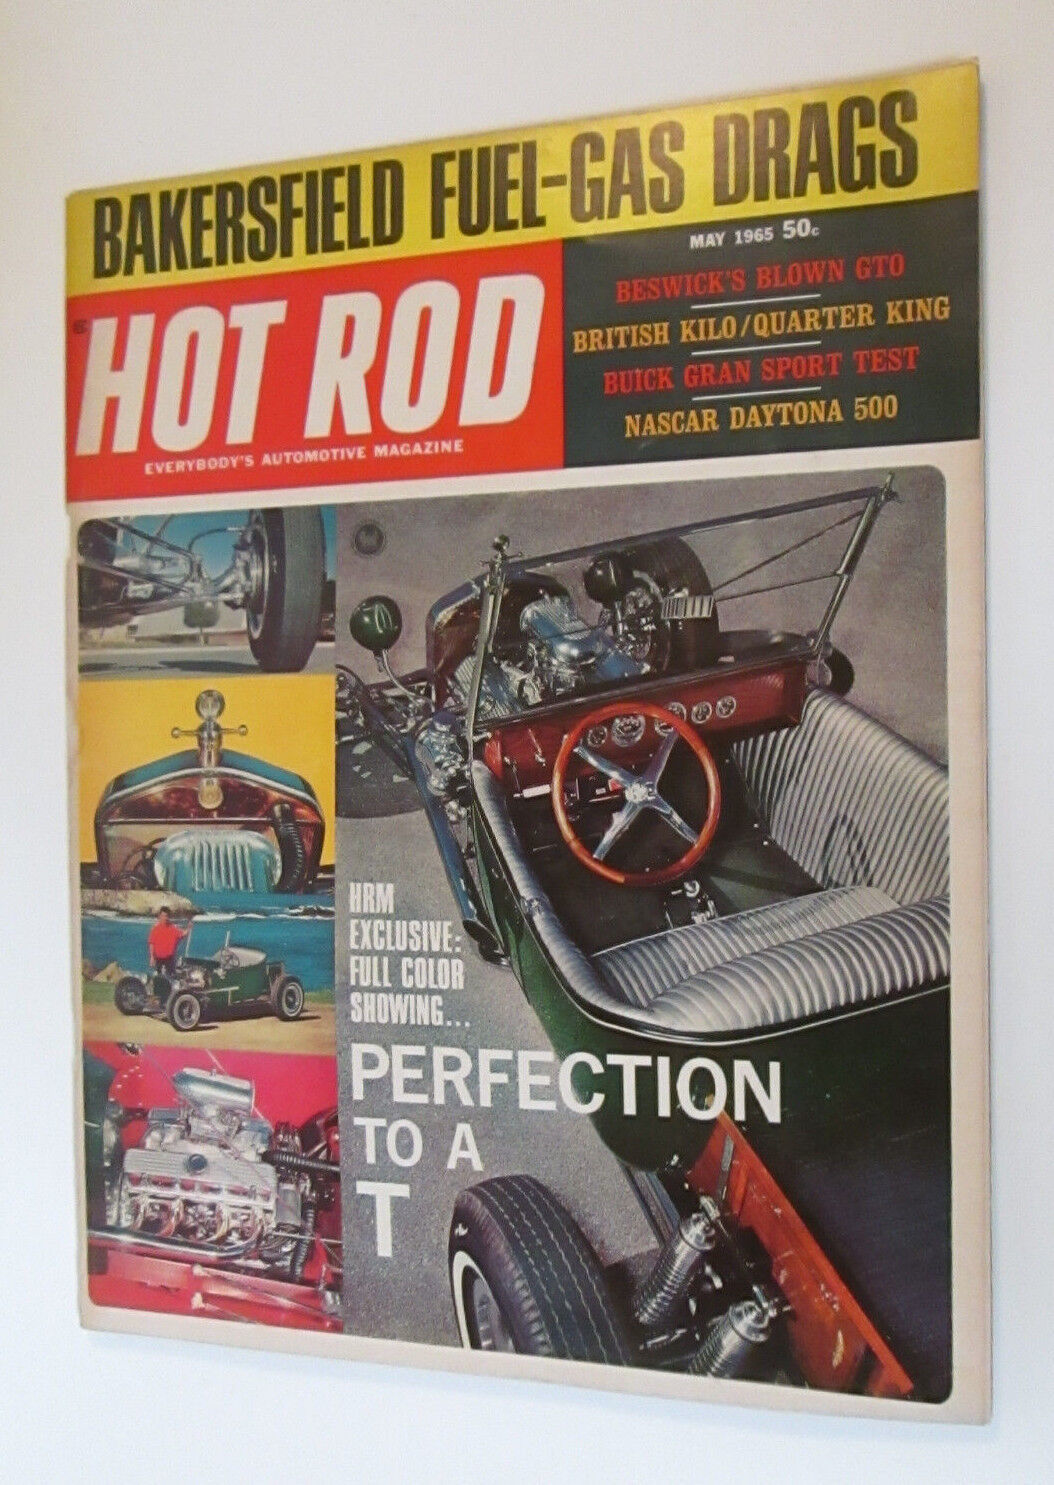  HOT ROD MAGAZINE VINTAGE 1965 MAY CORVETTE GASSER CHEVY FORD MOPAR Cars - $10.00